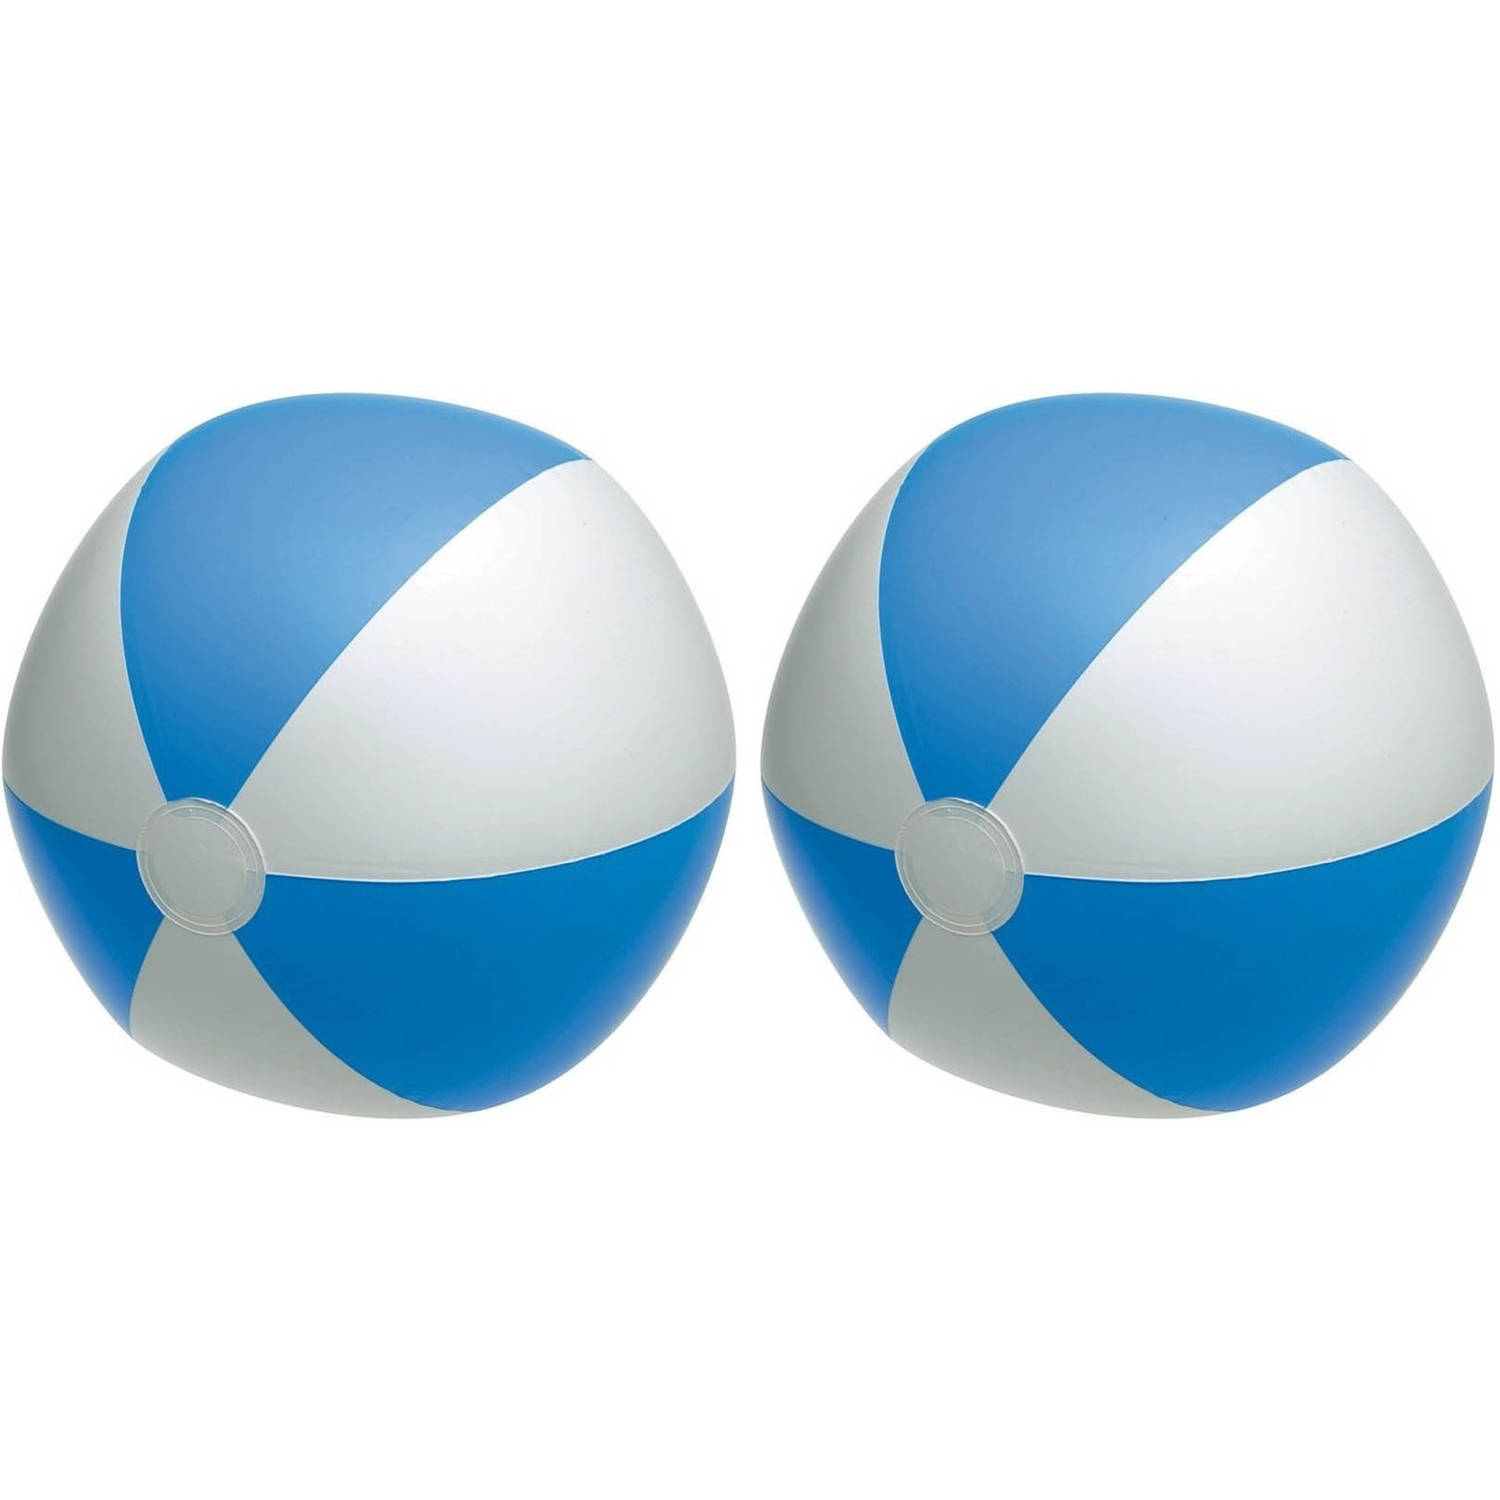 2x Opblaasbare Strandballen Blauw-wit 28 Cm Speelgoed Strandballen